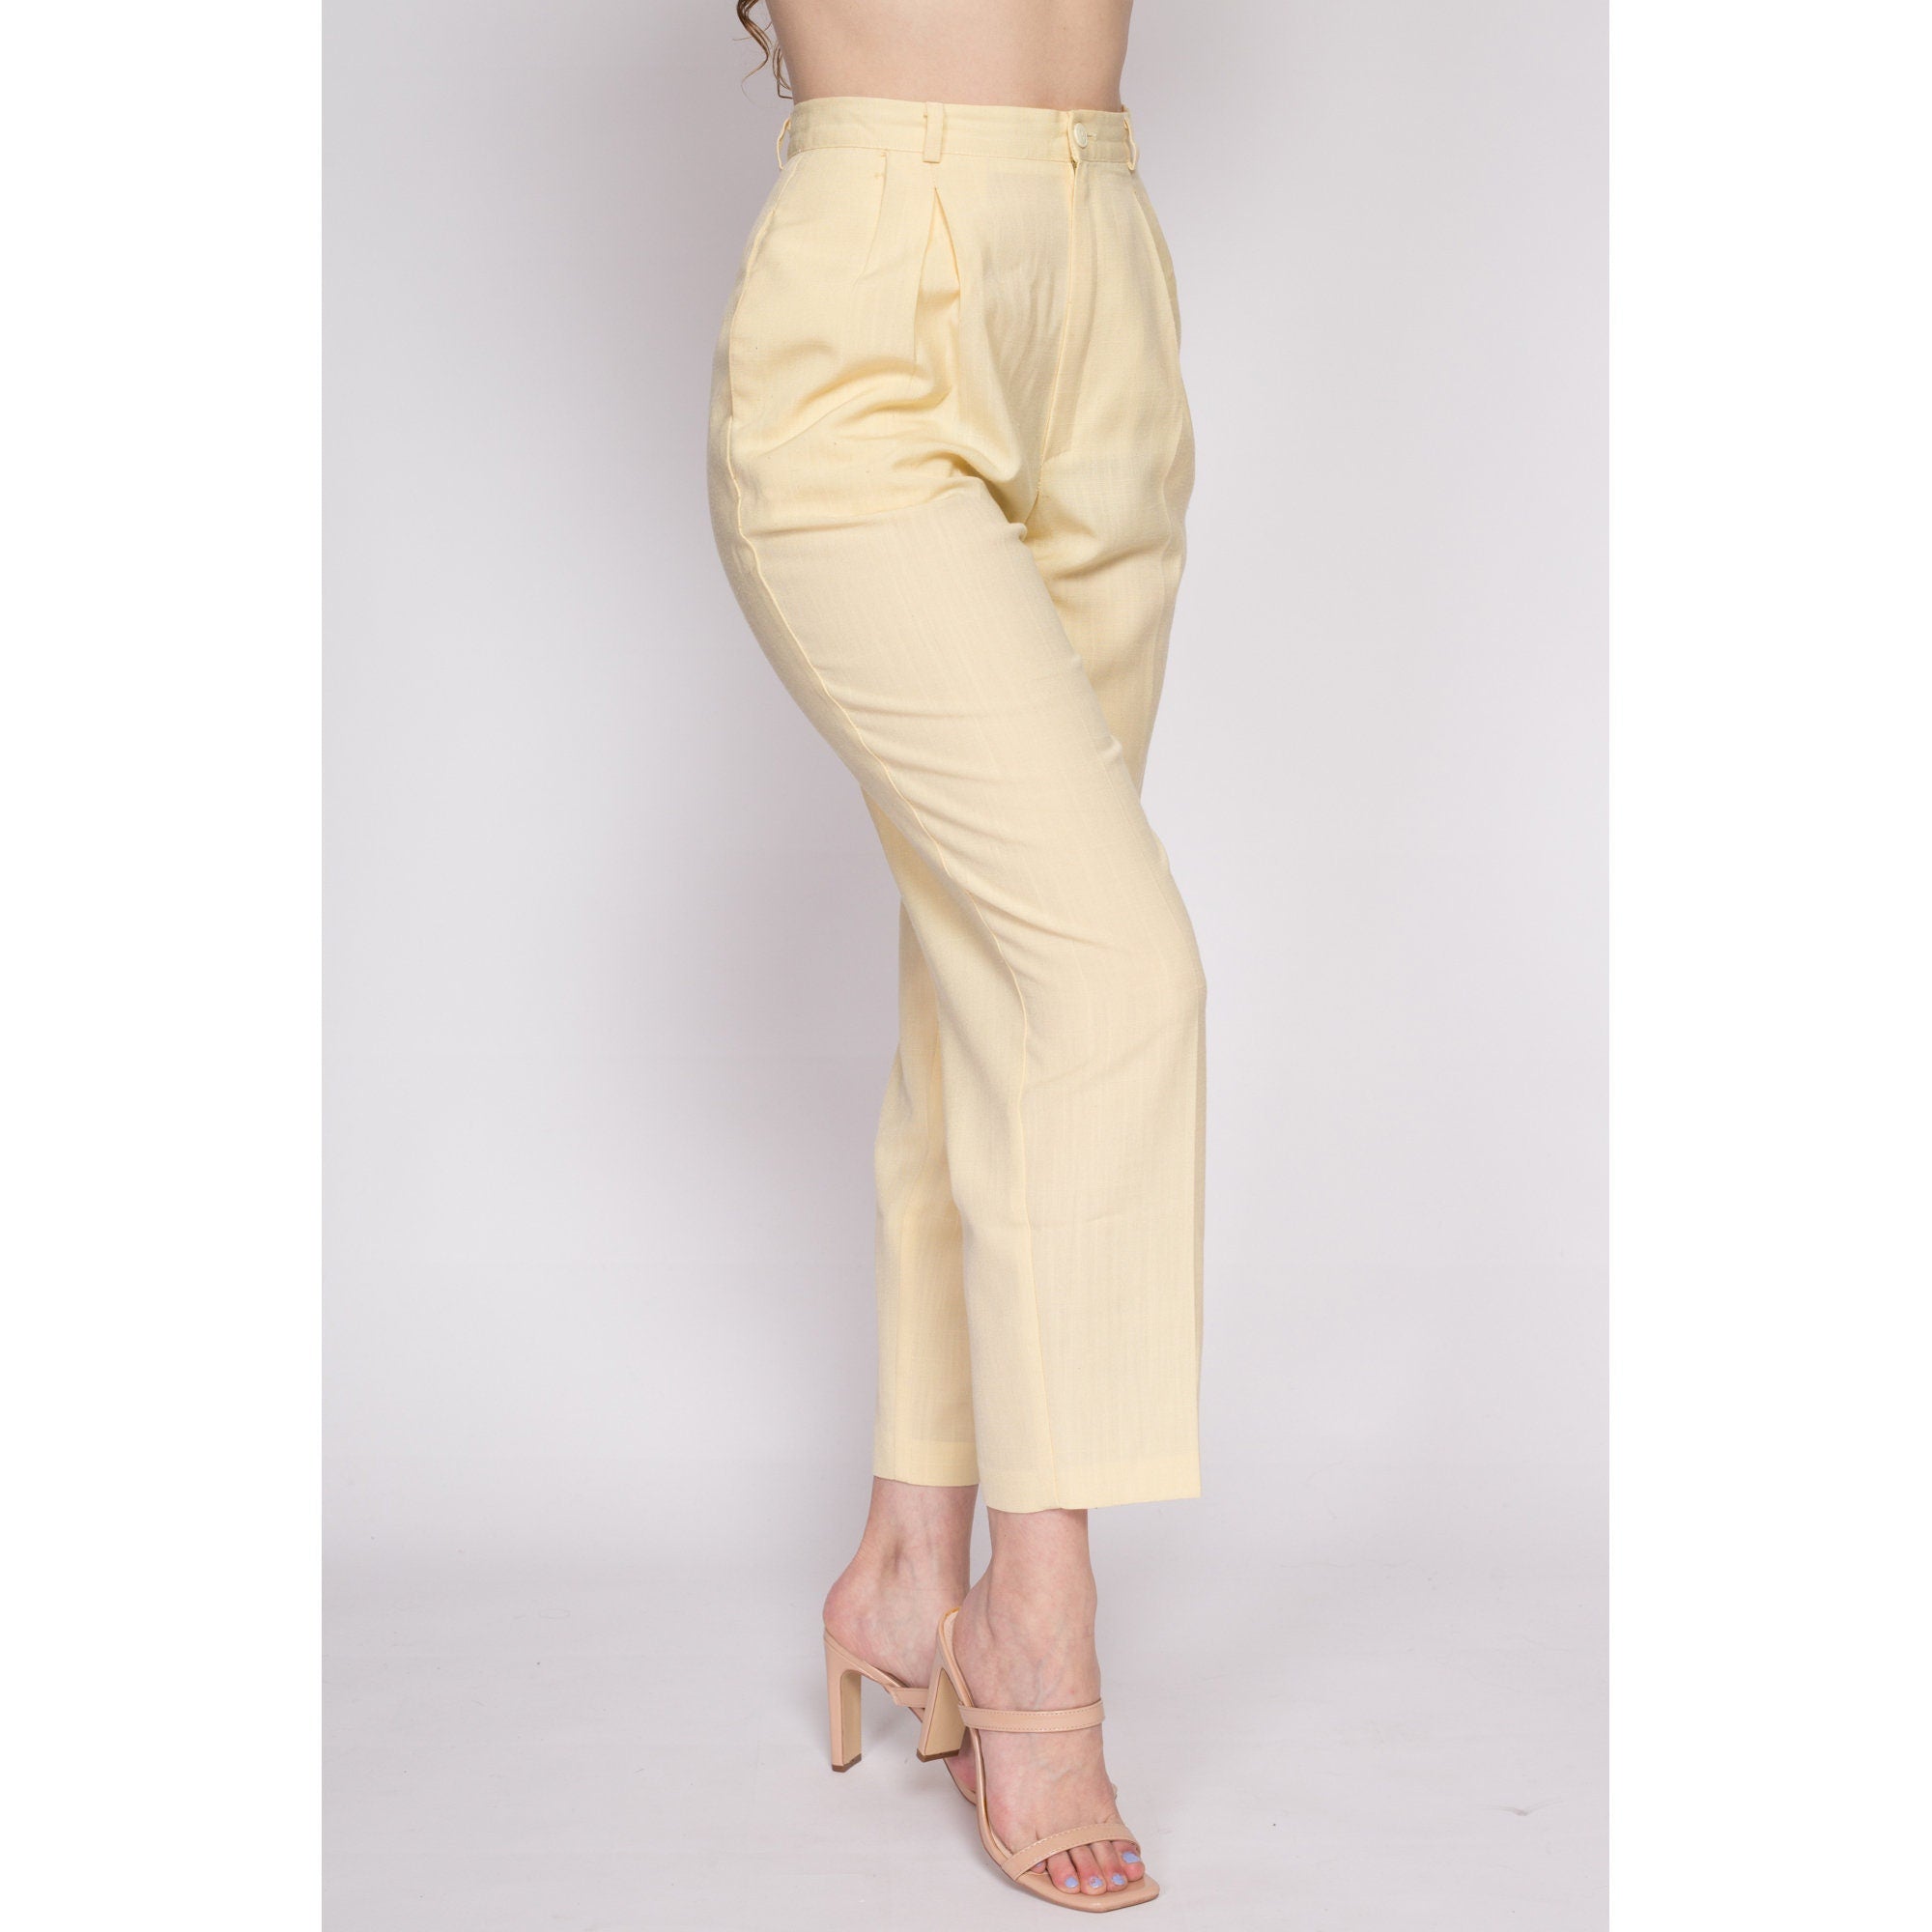 ZRA High waist trousers mint beige - Cameo Outfits